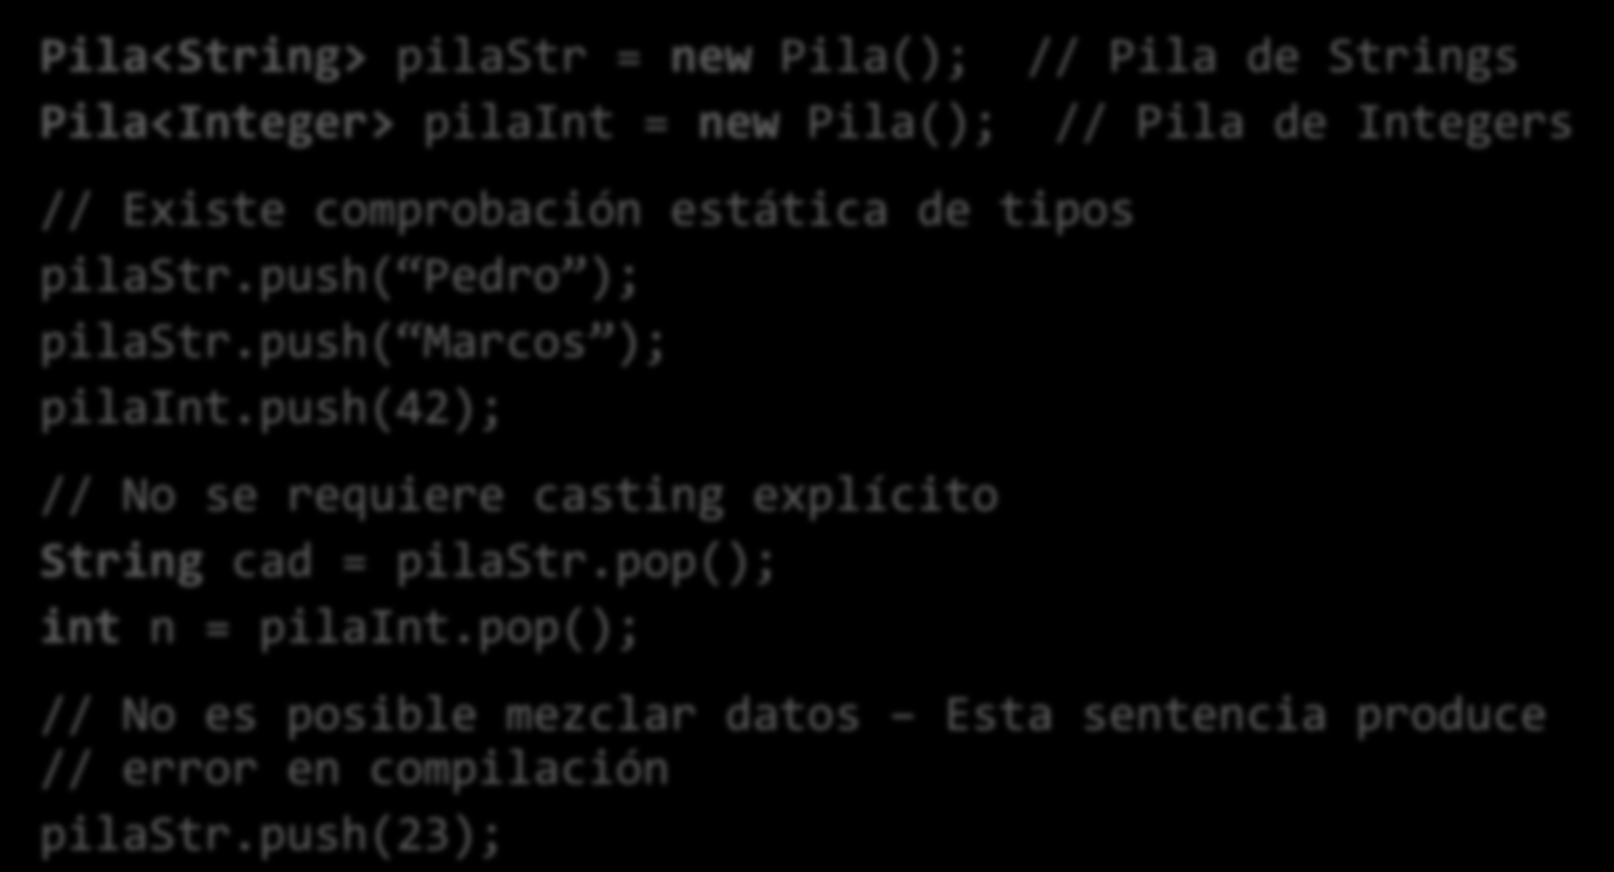 Clase Parametrizada (II) Pila<String> pilastr = new Pila(); // Pila de Strings Pila<Integer> pilaint = new Pila(); // Pila de Integers // Existe comprobación estática de tipos pilastr.